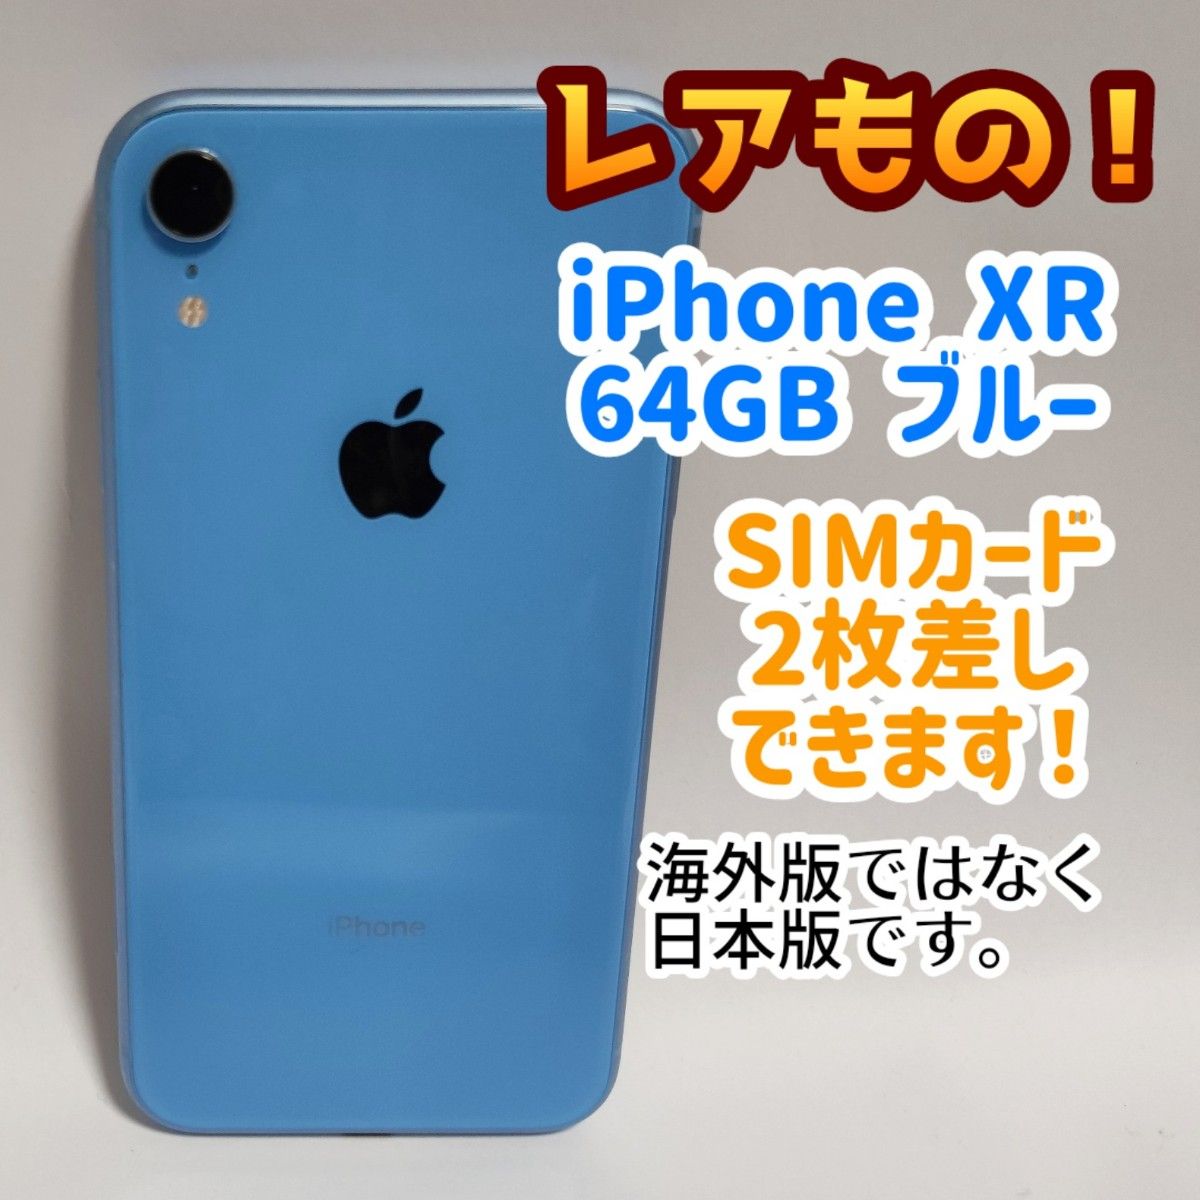 iPhone XR 64GB 物理デュアルSIM対応 SIMロック解除済 ブルー-